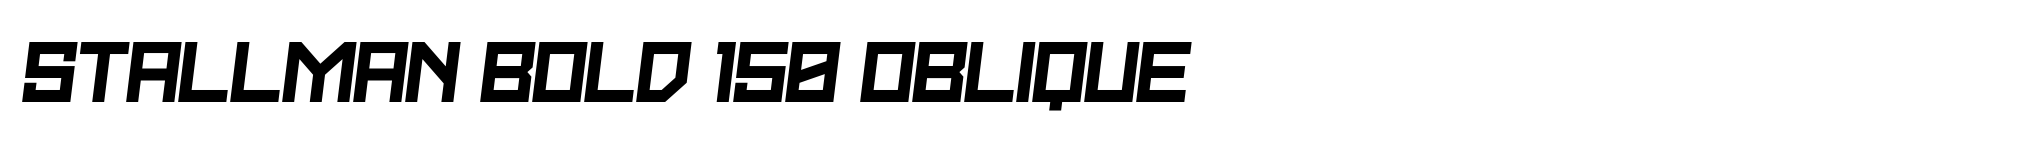 Stallman Bold 150 Oblique image